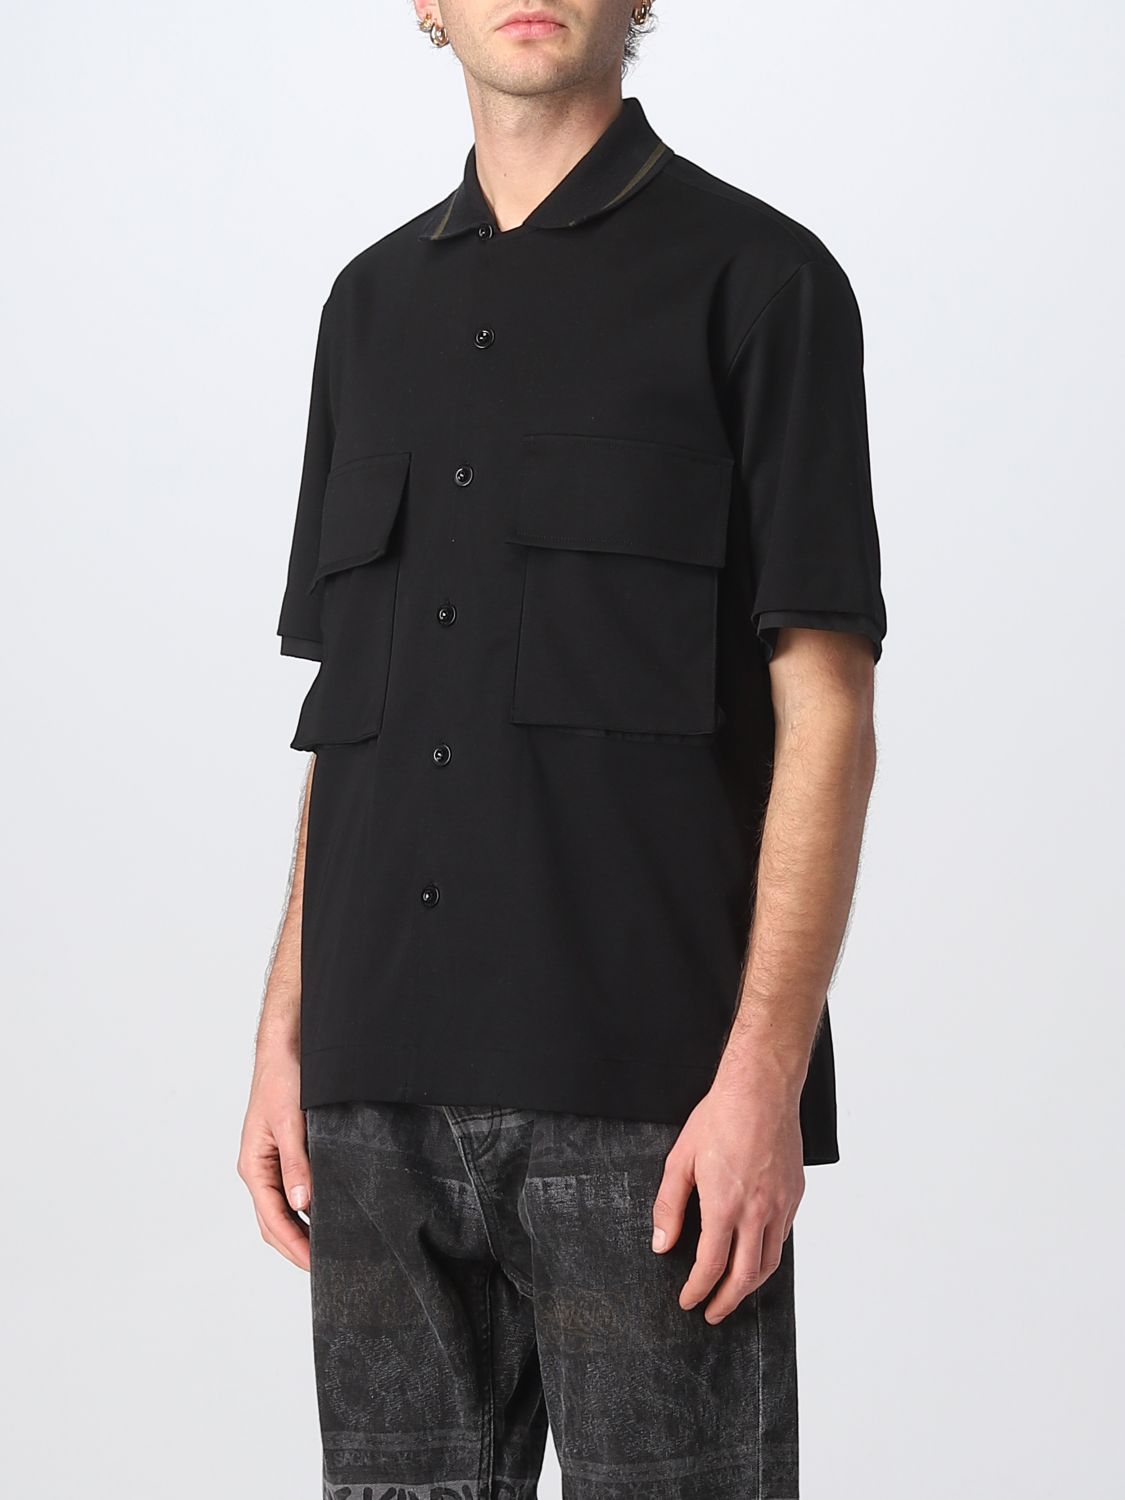 Shirt Sacai: Sacai shirt for man black 3